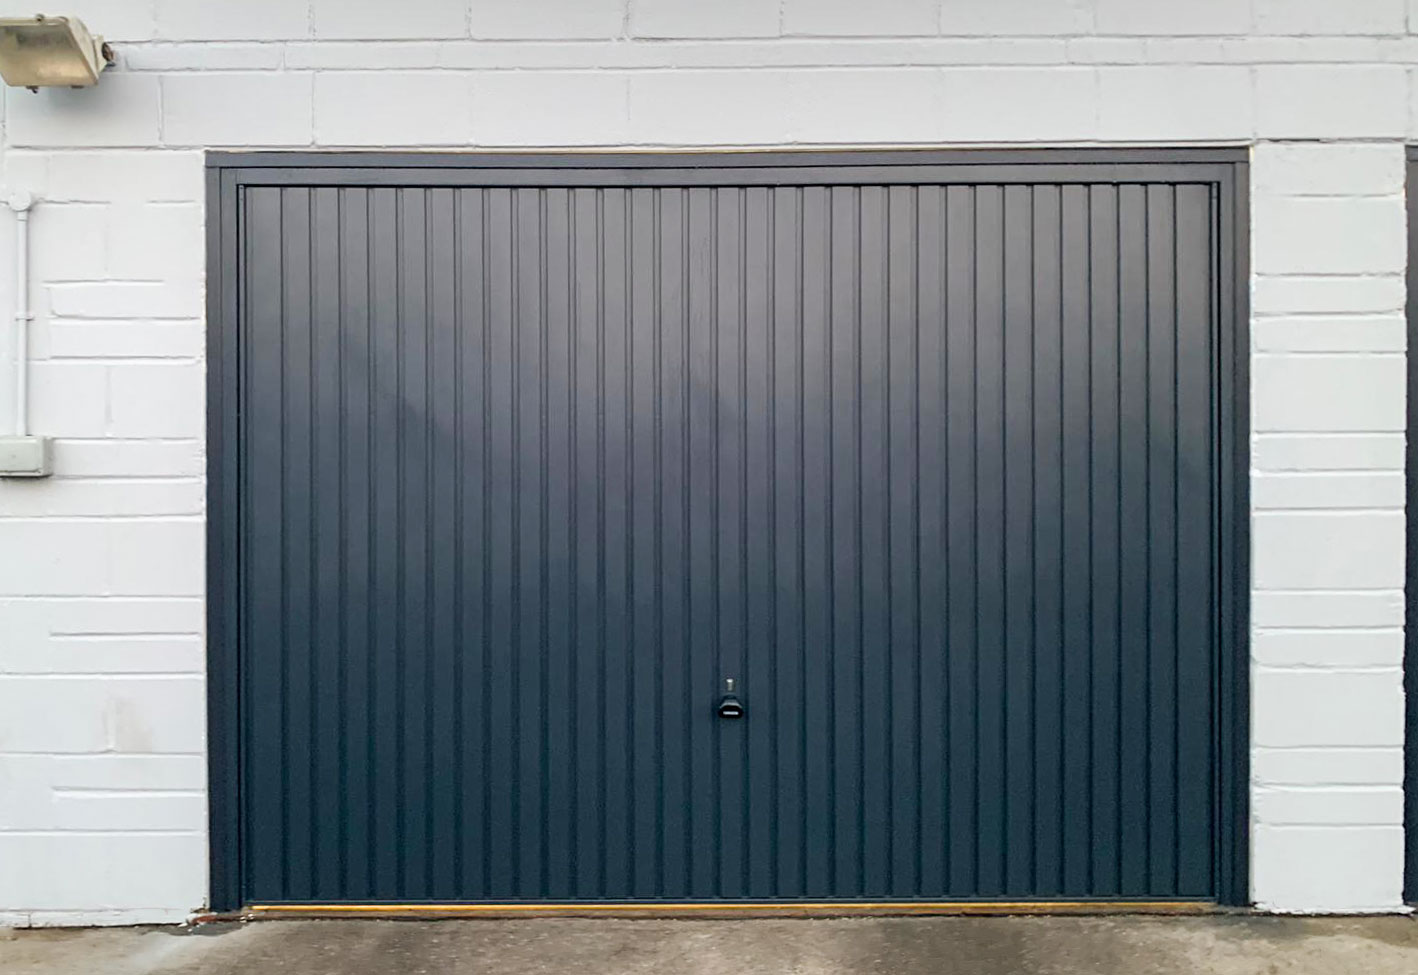 Garador Carlton Canopy Garage doors in Anthracite Grey